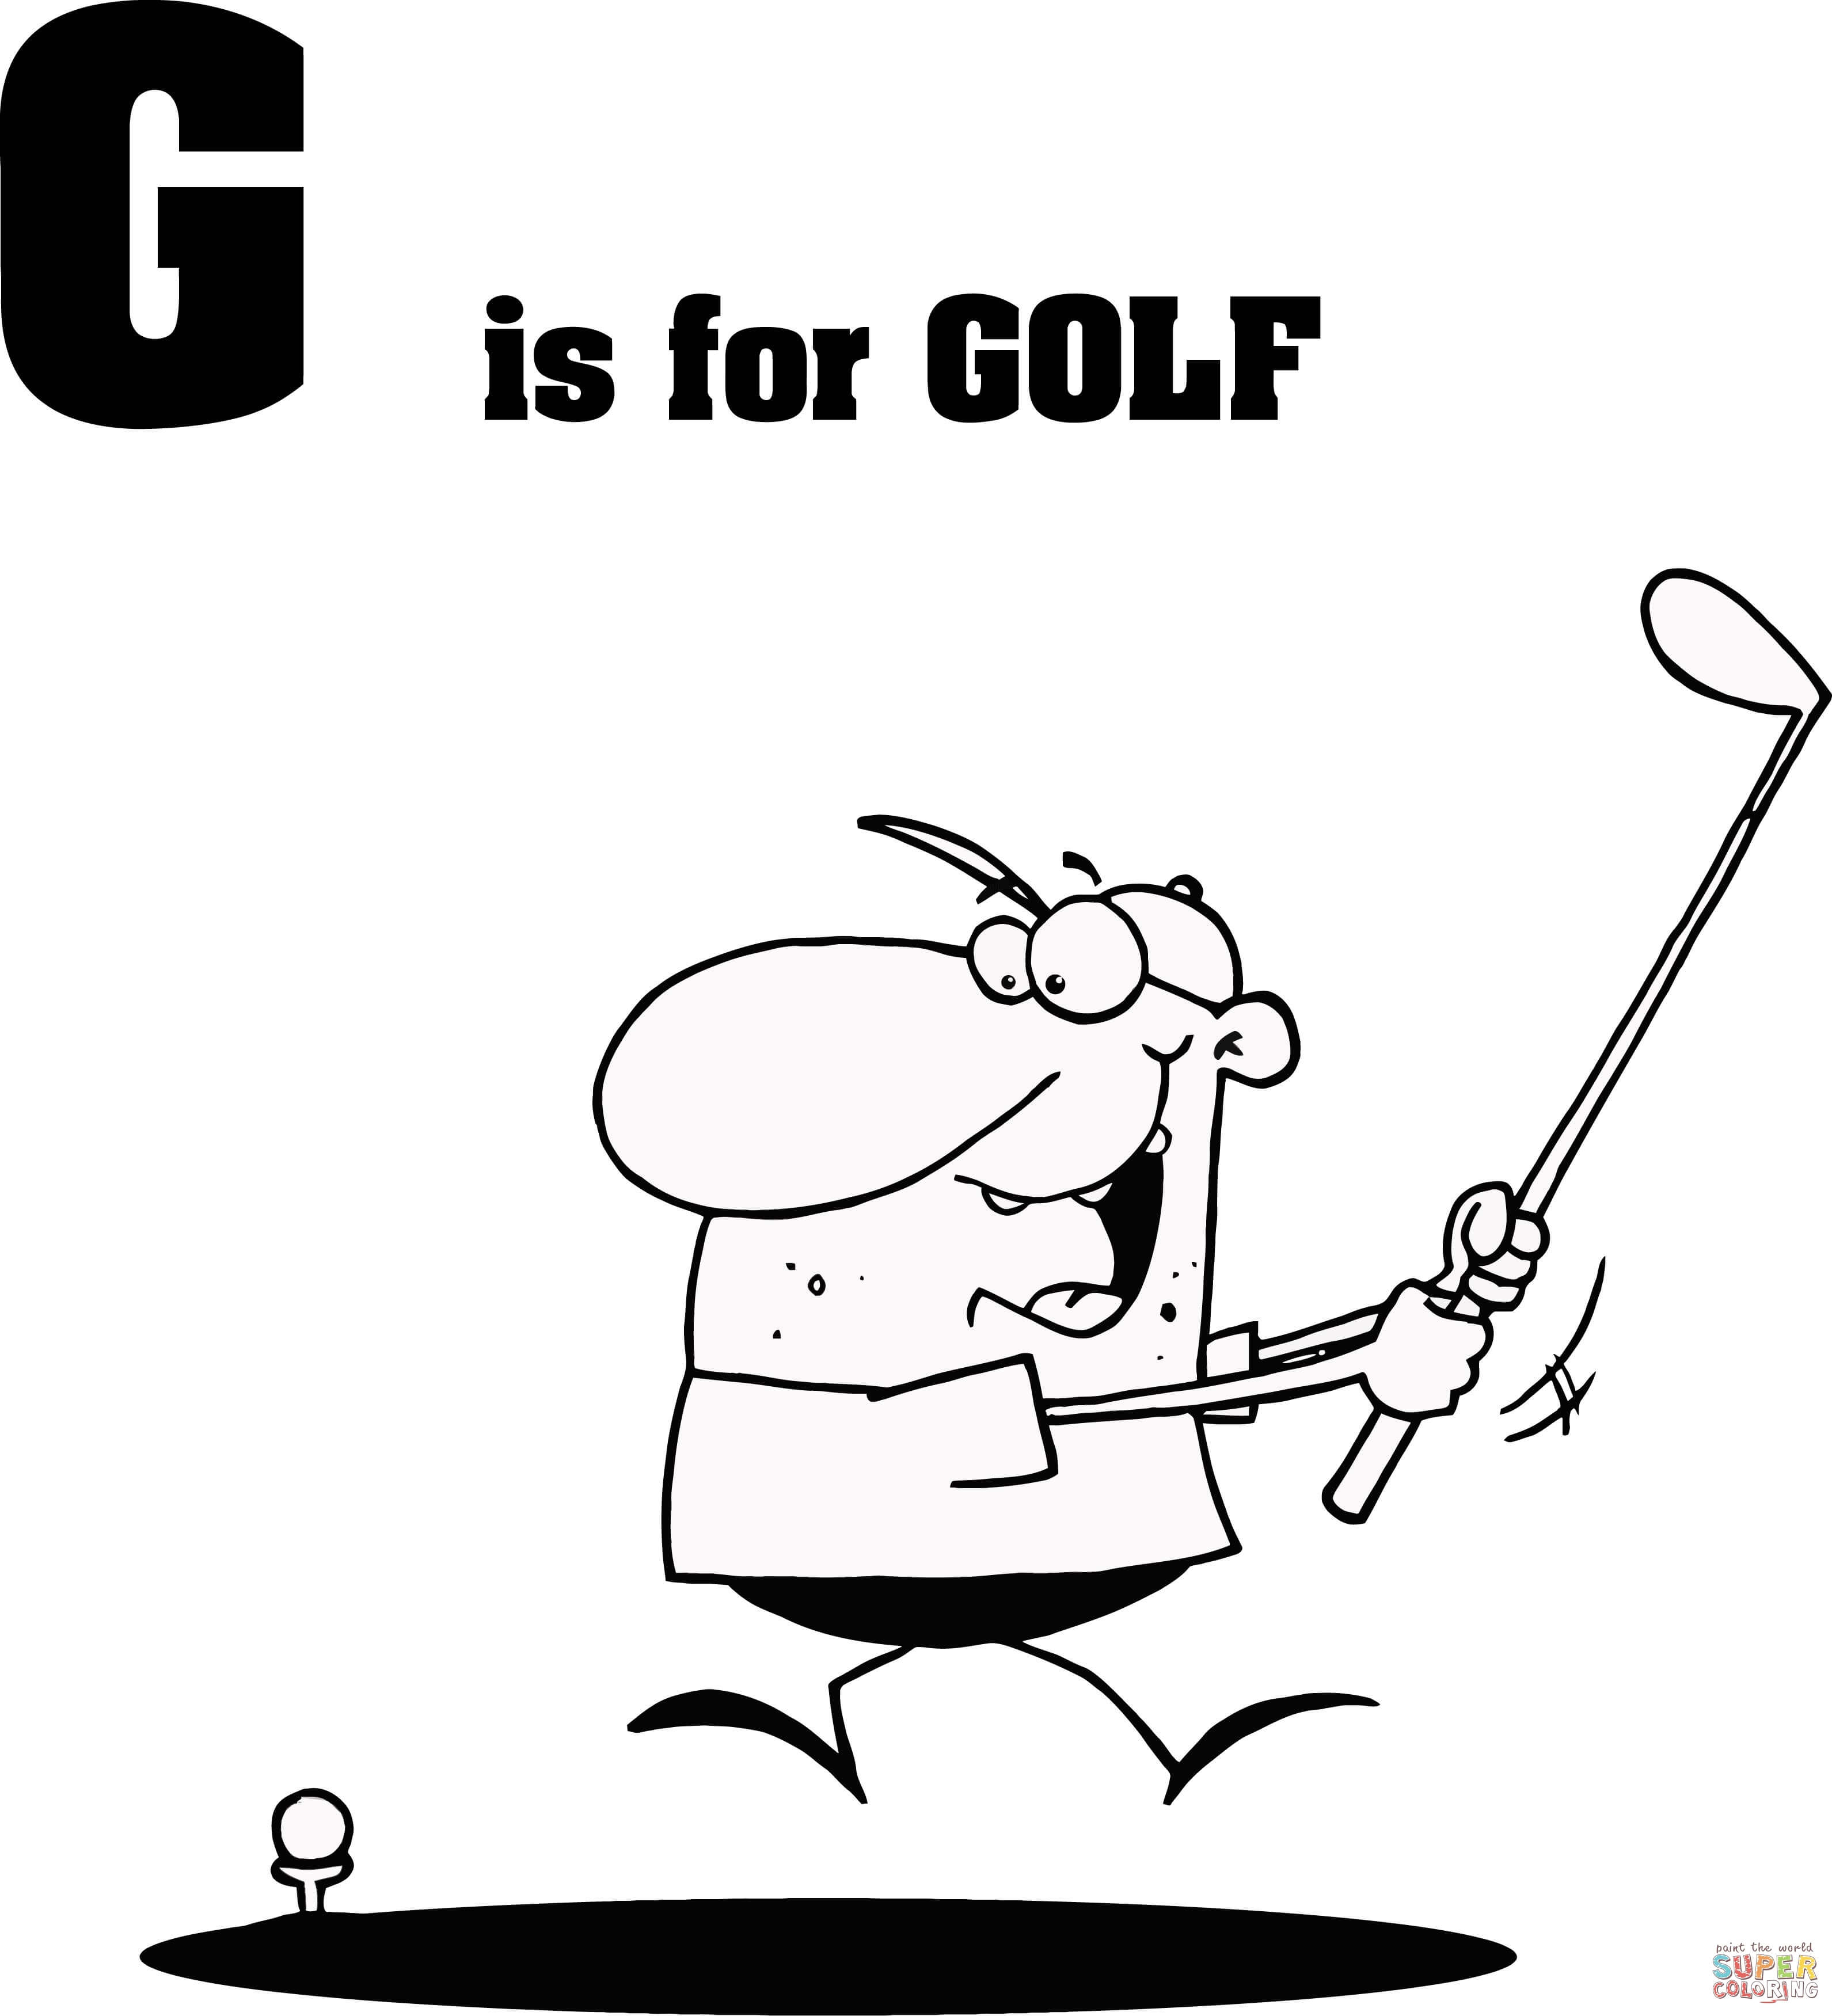 Буква G означает гольф из буквы G.